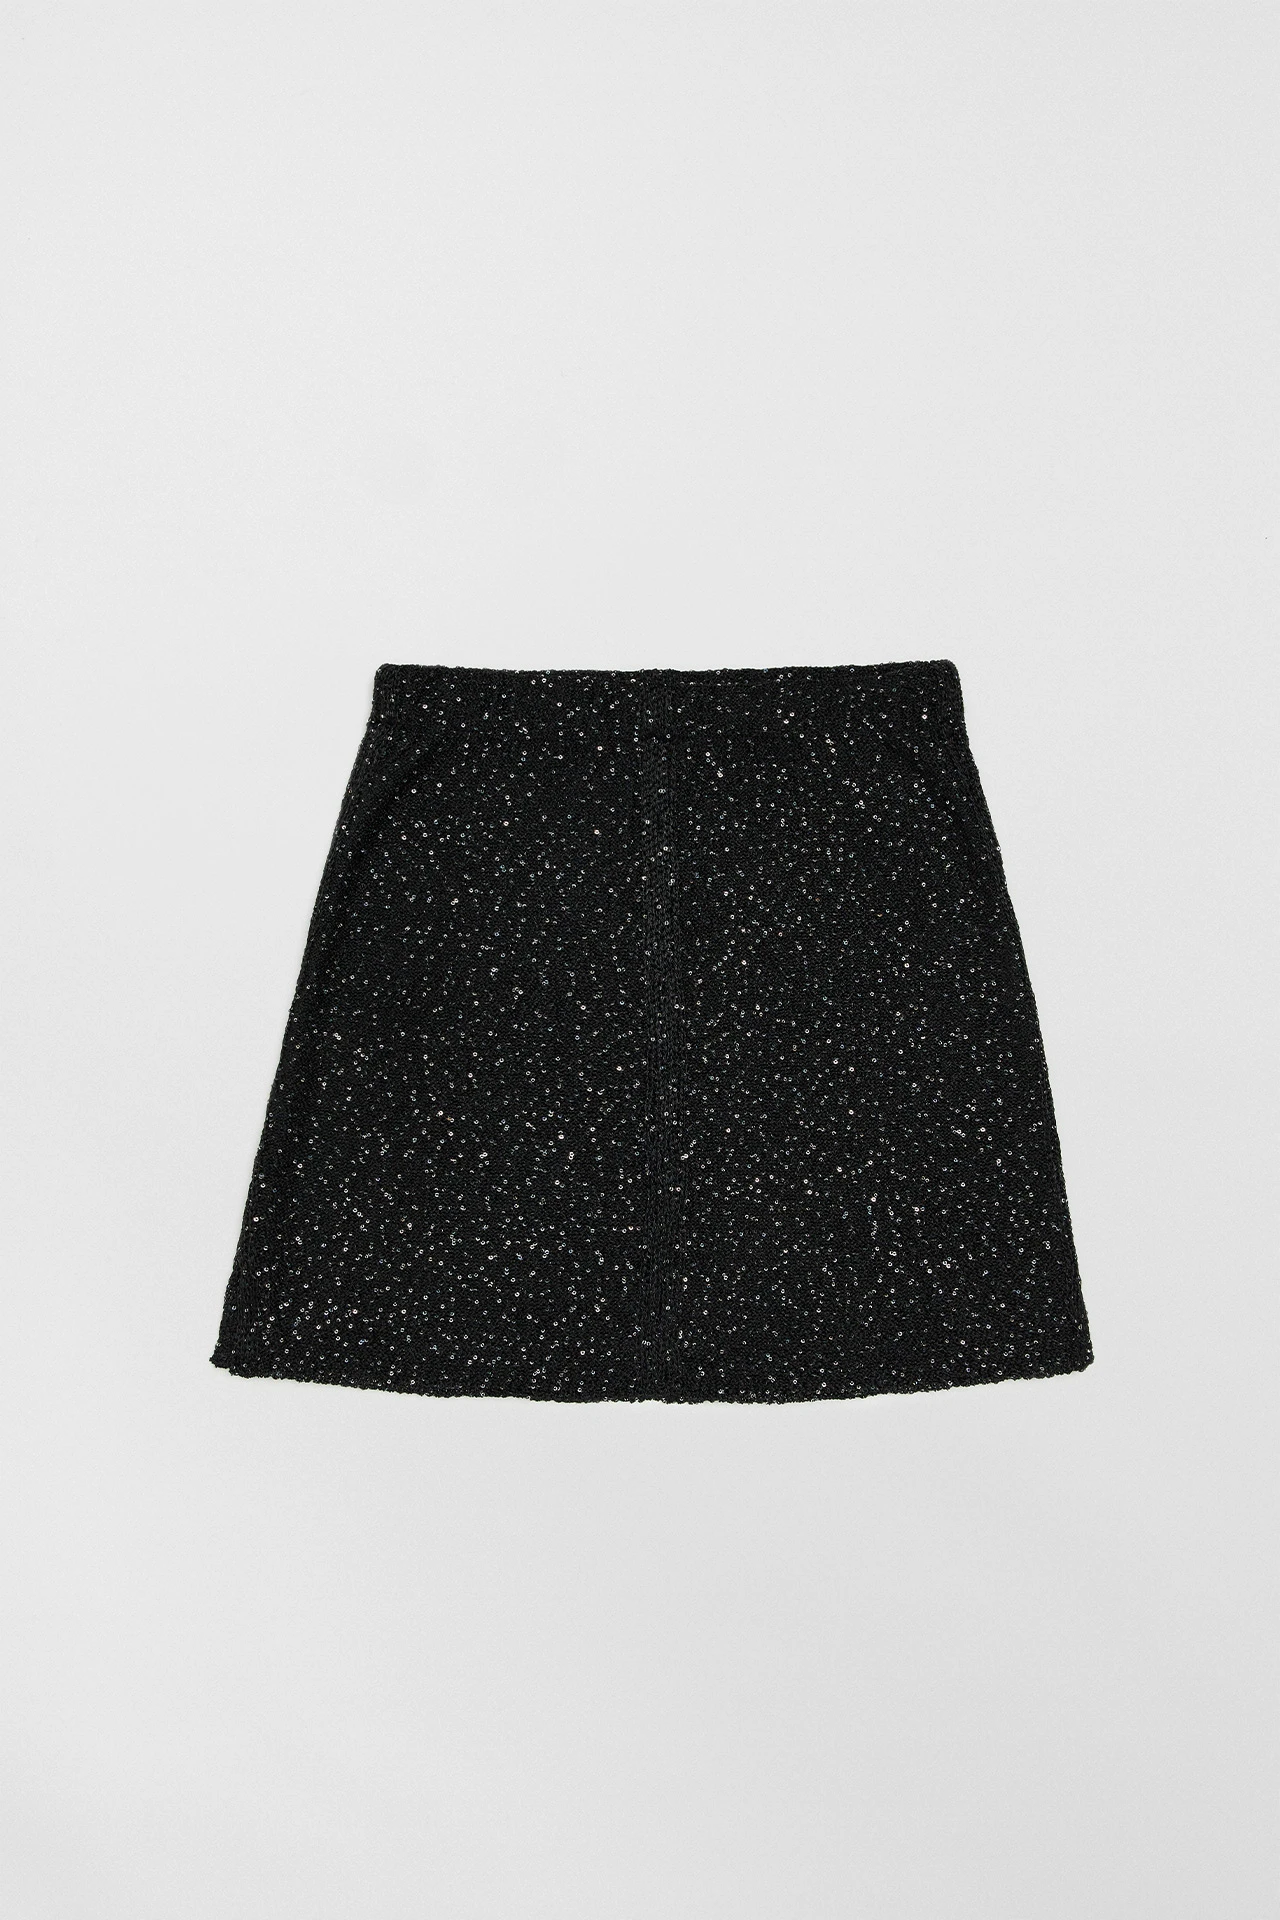 Miista-eva-black-skirt-01